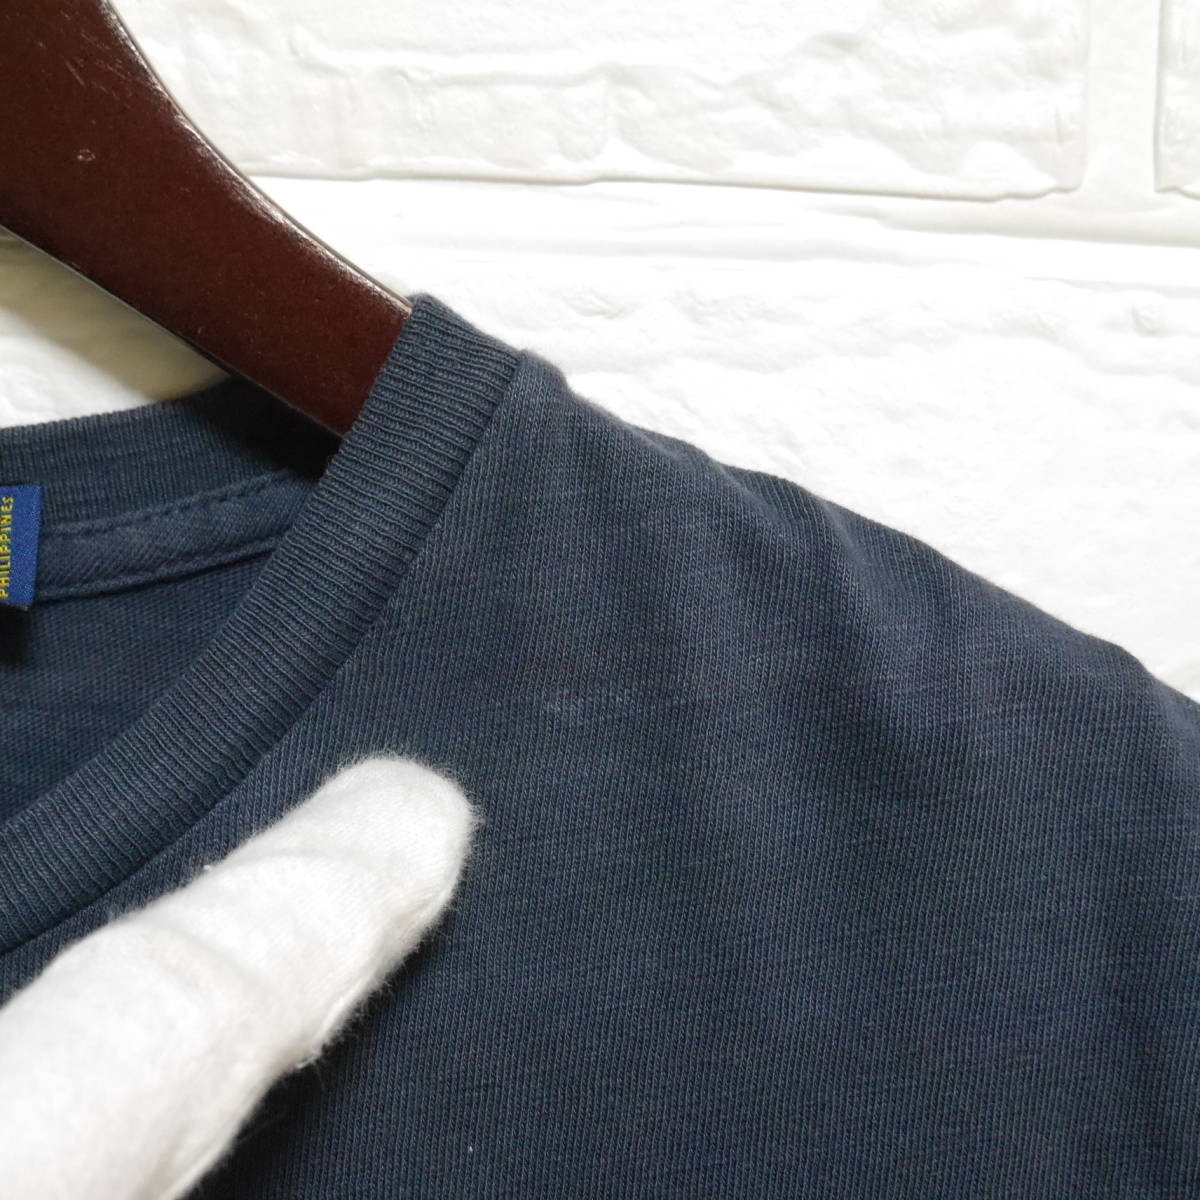 F21 * POLO RALPH LAUREN * Polo Ralph Lauren короткий рукав футболка темно-синий серия б/у размер XS